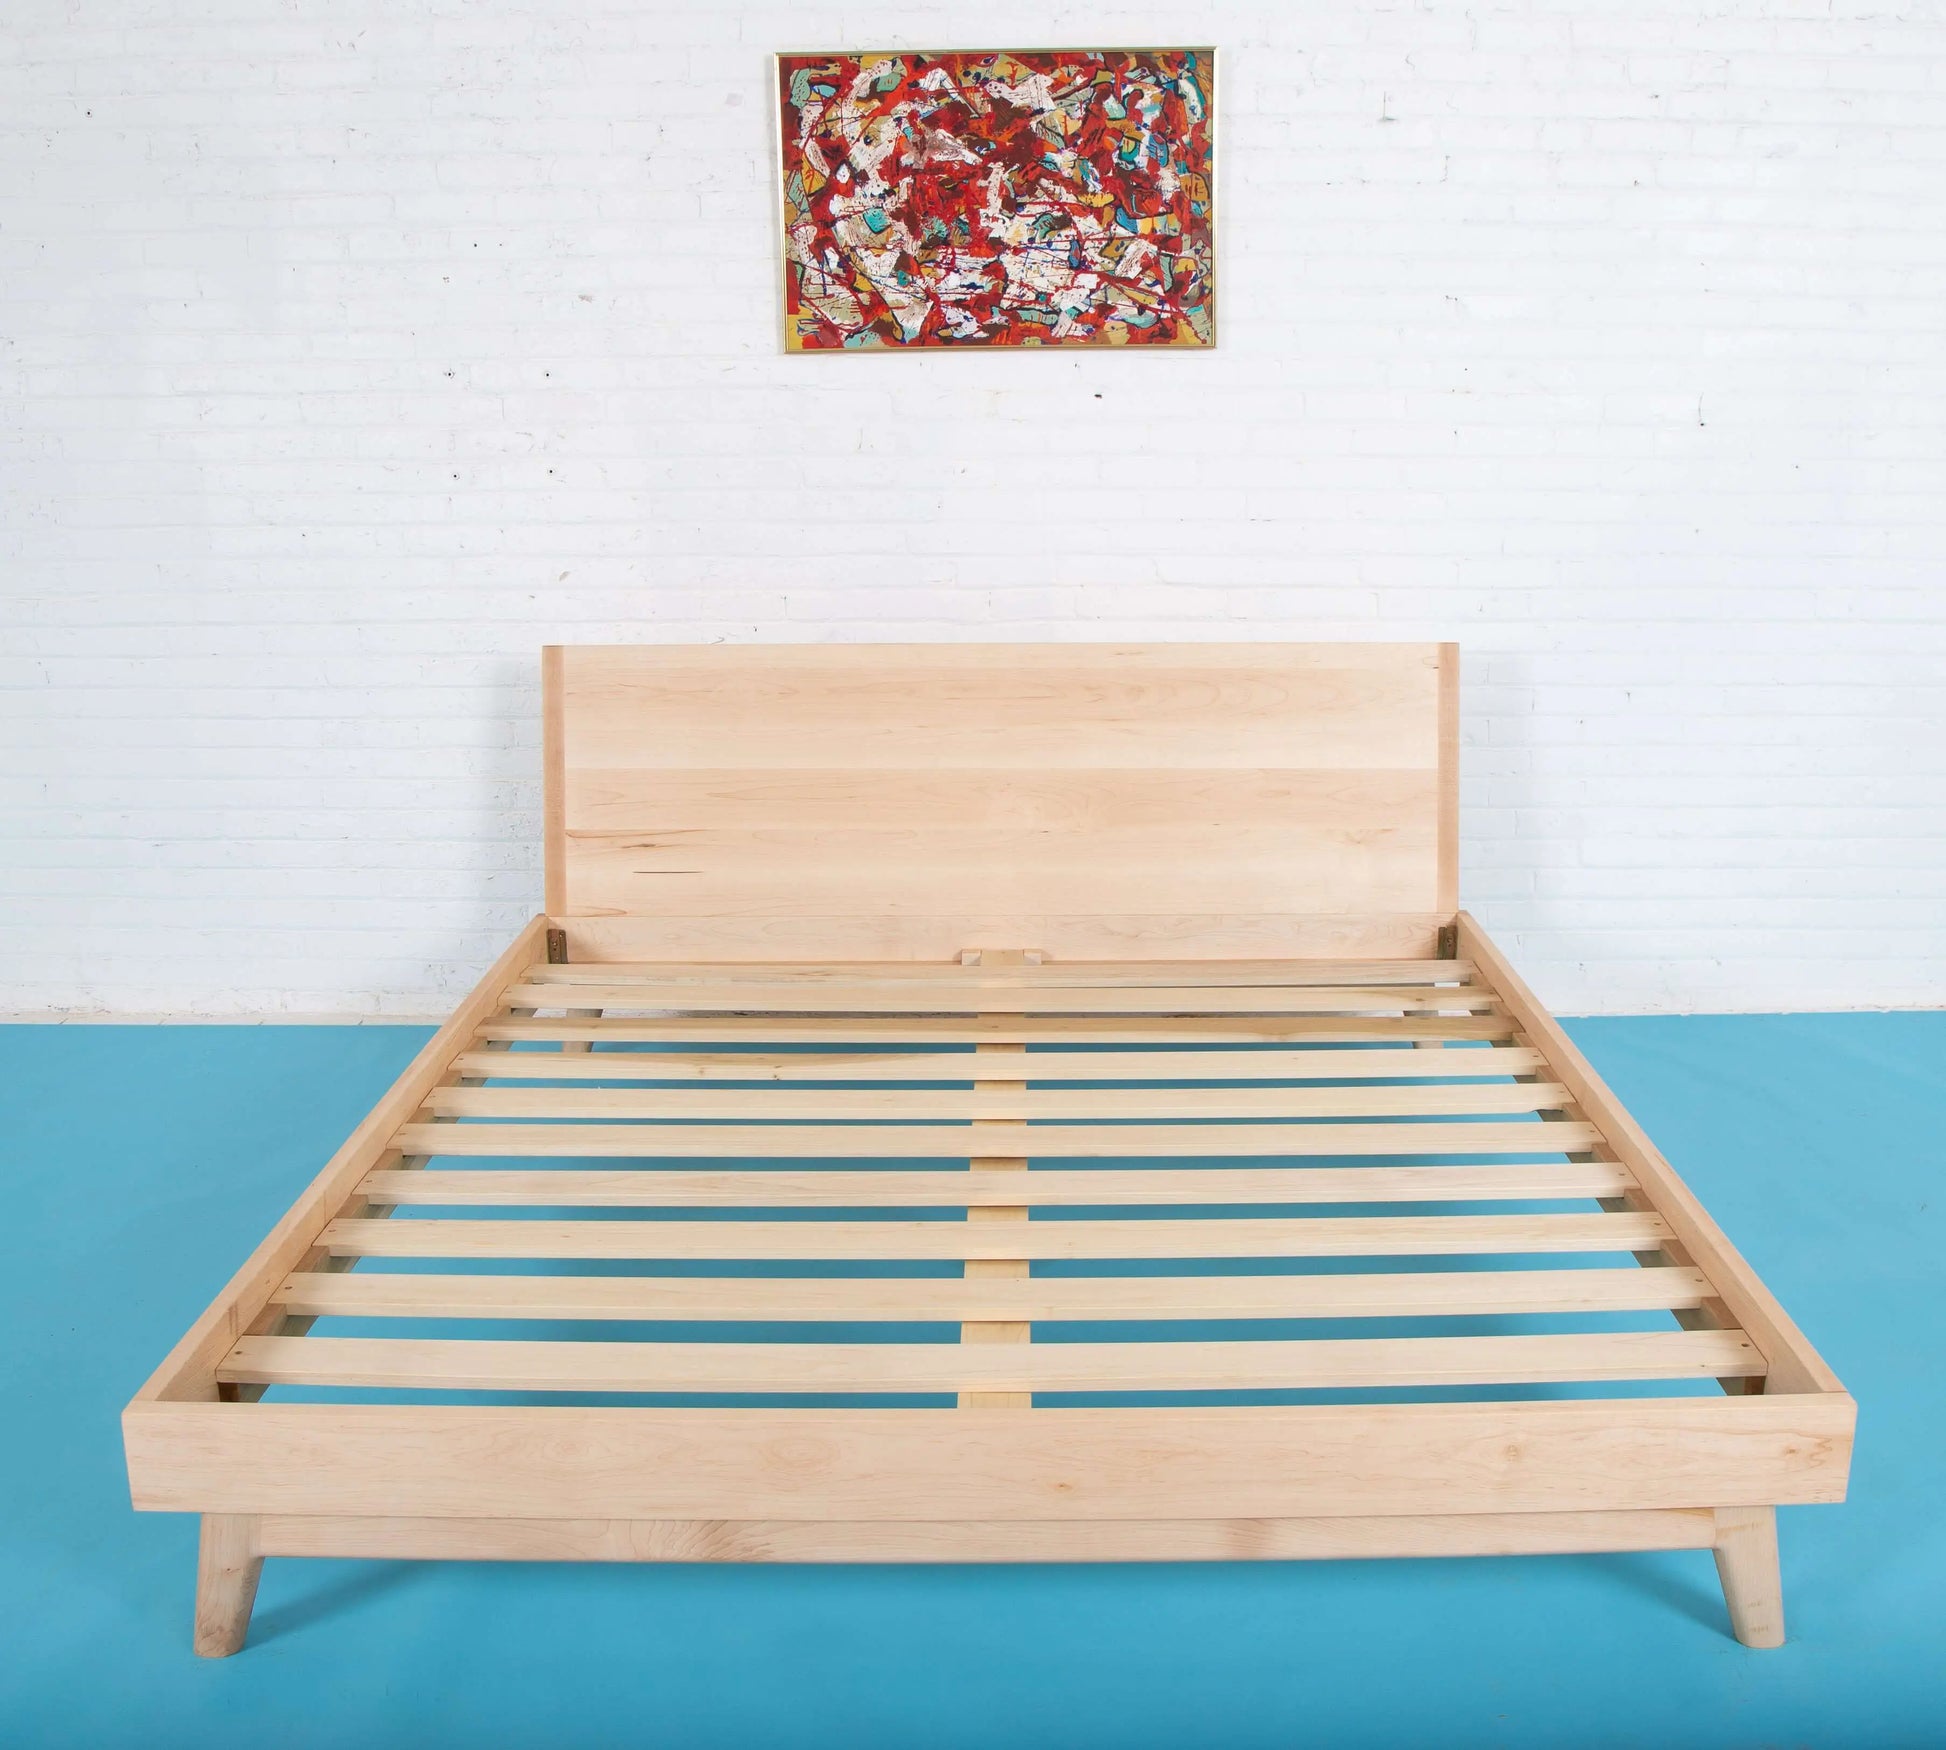 Artisanal Craftsmanship: Handmade Walnut Bed with Mid Century Flair